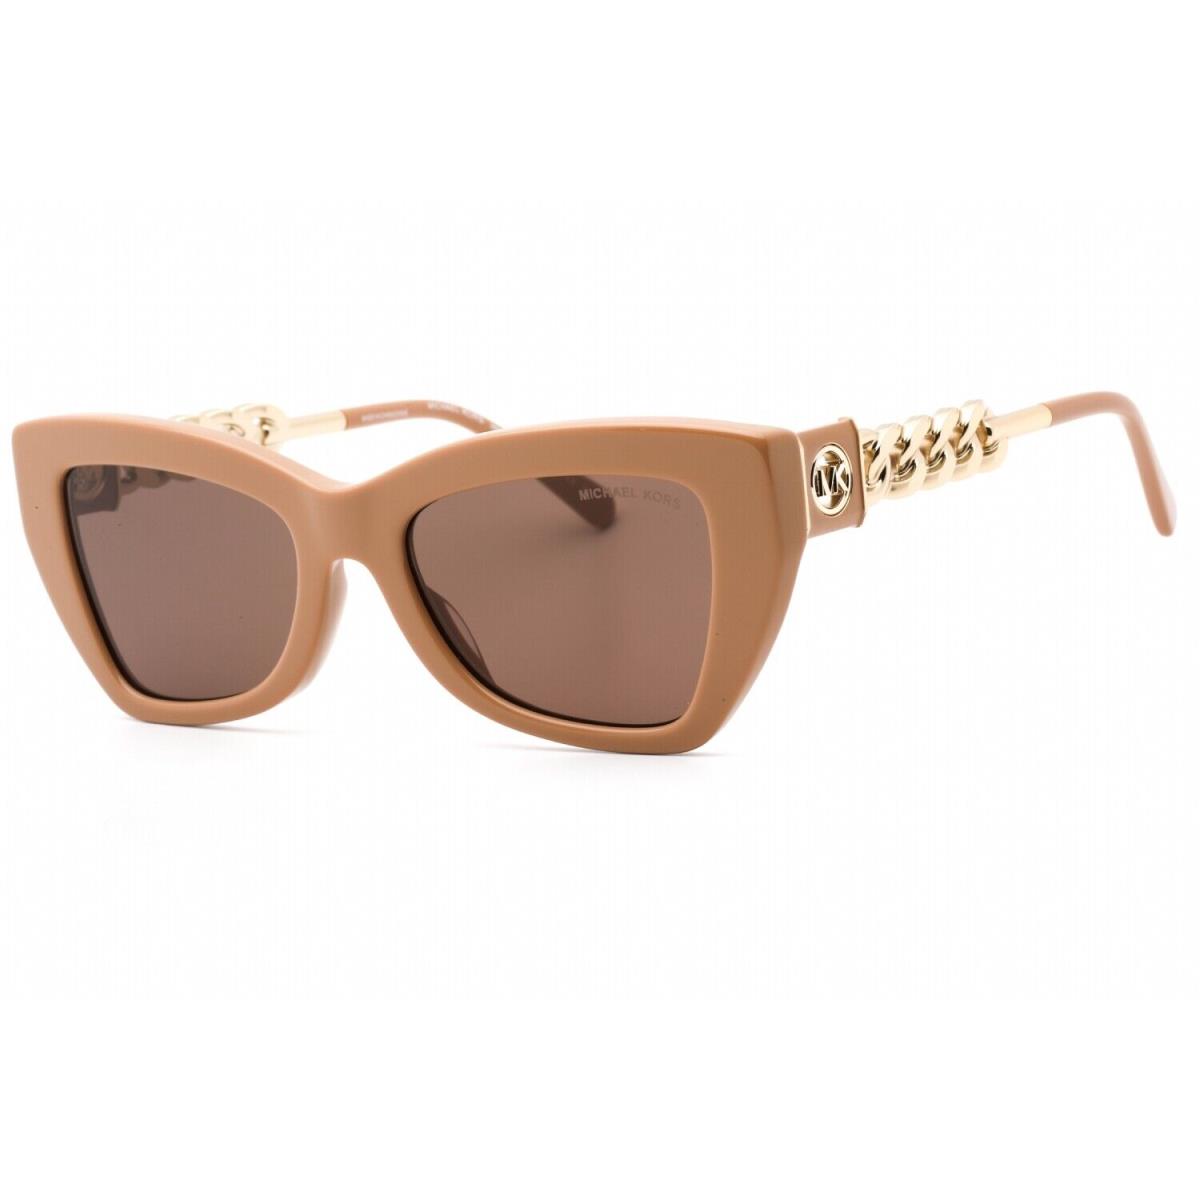 Michael Kors MK2205 395473 Sunglasses Brown Frame Brown Lenses 52mm